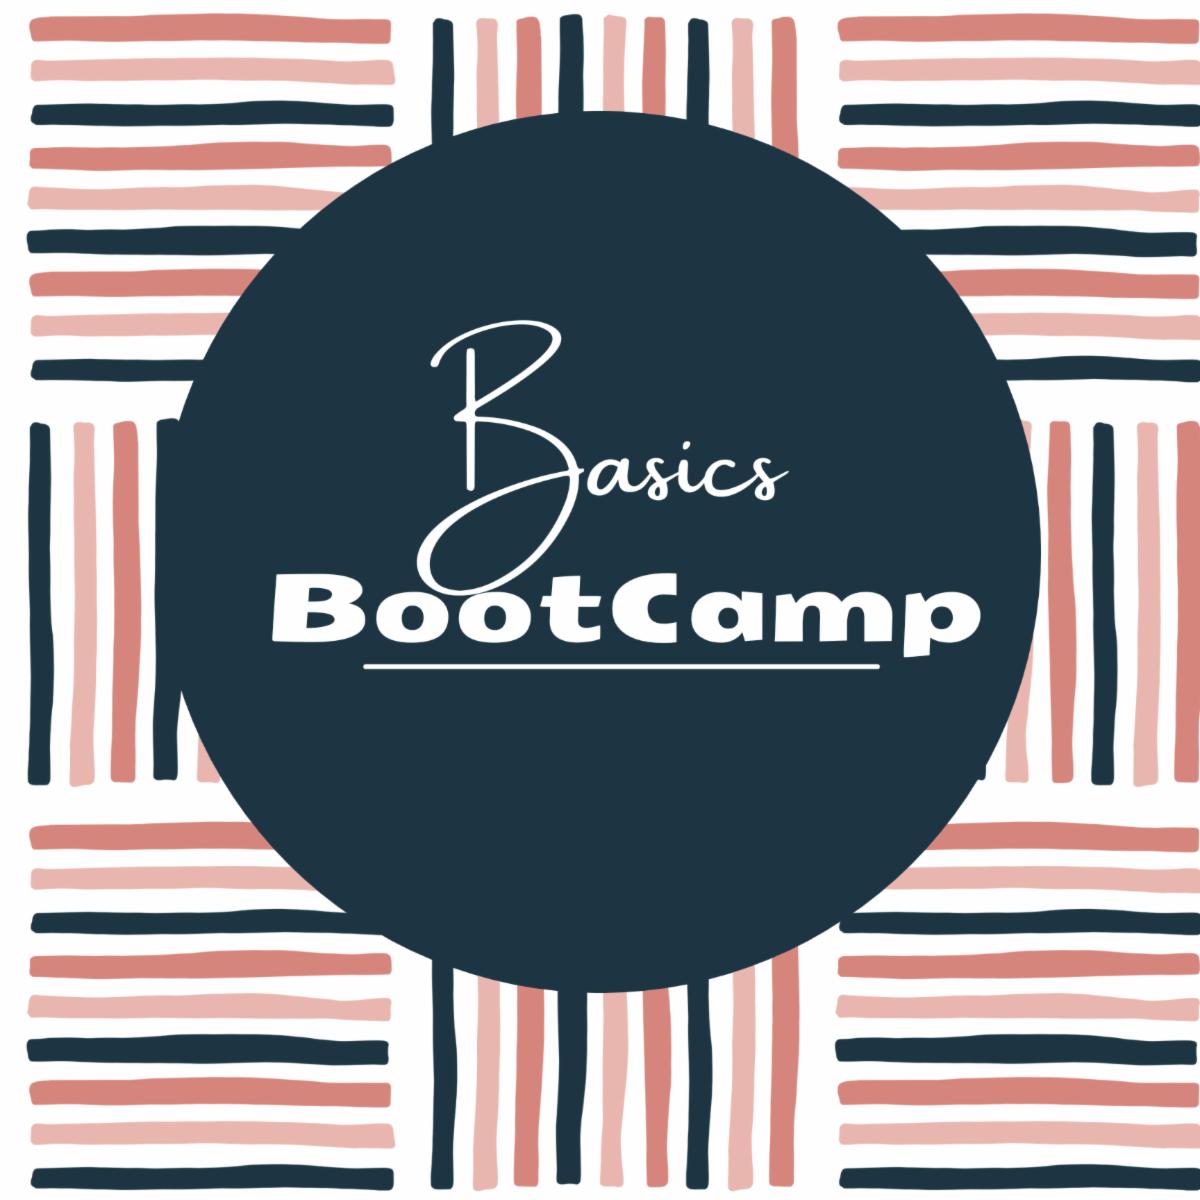 Birdsong Bootcamp 101 - The Basics